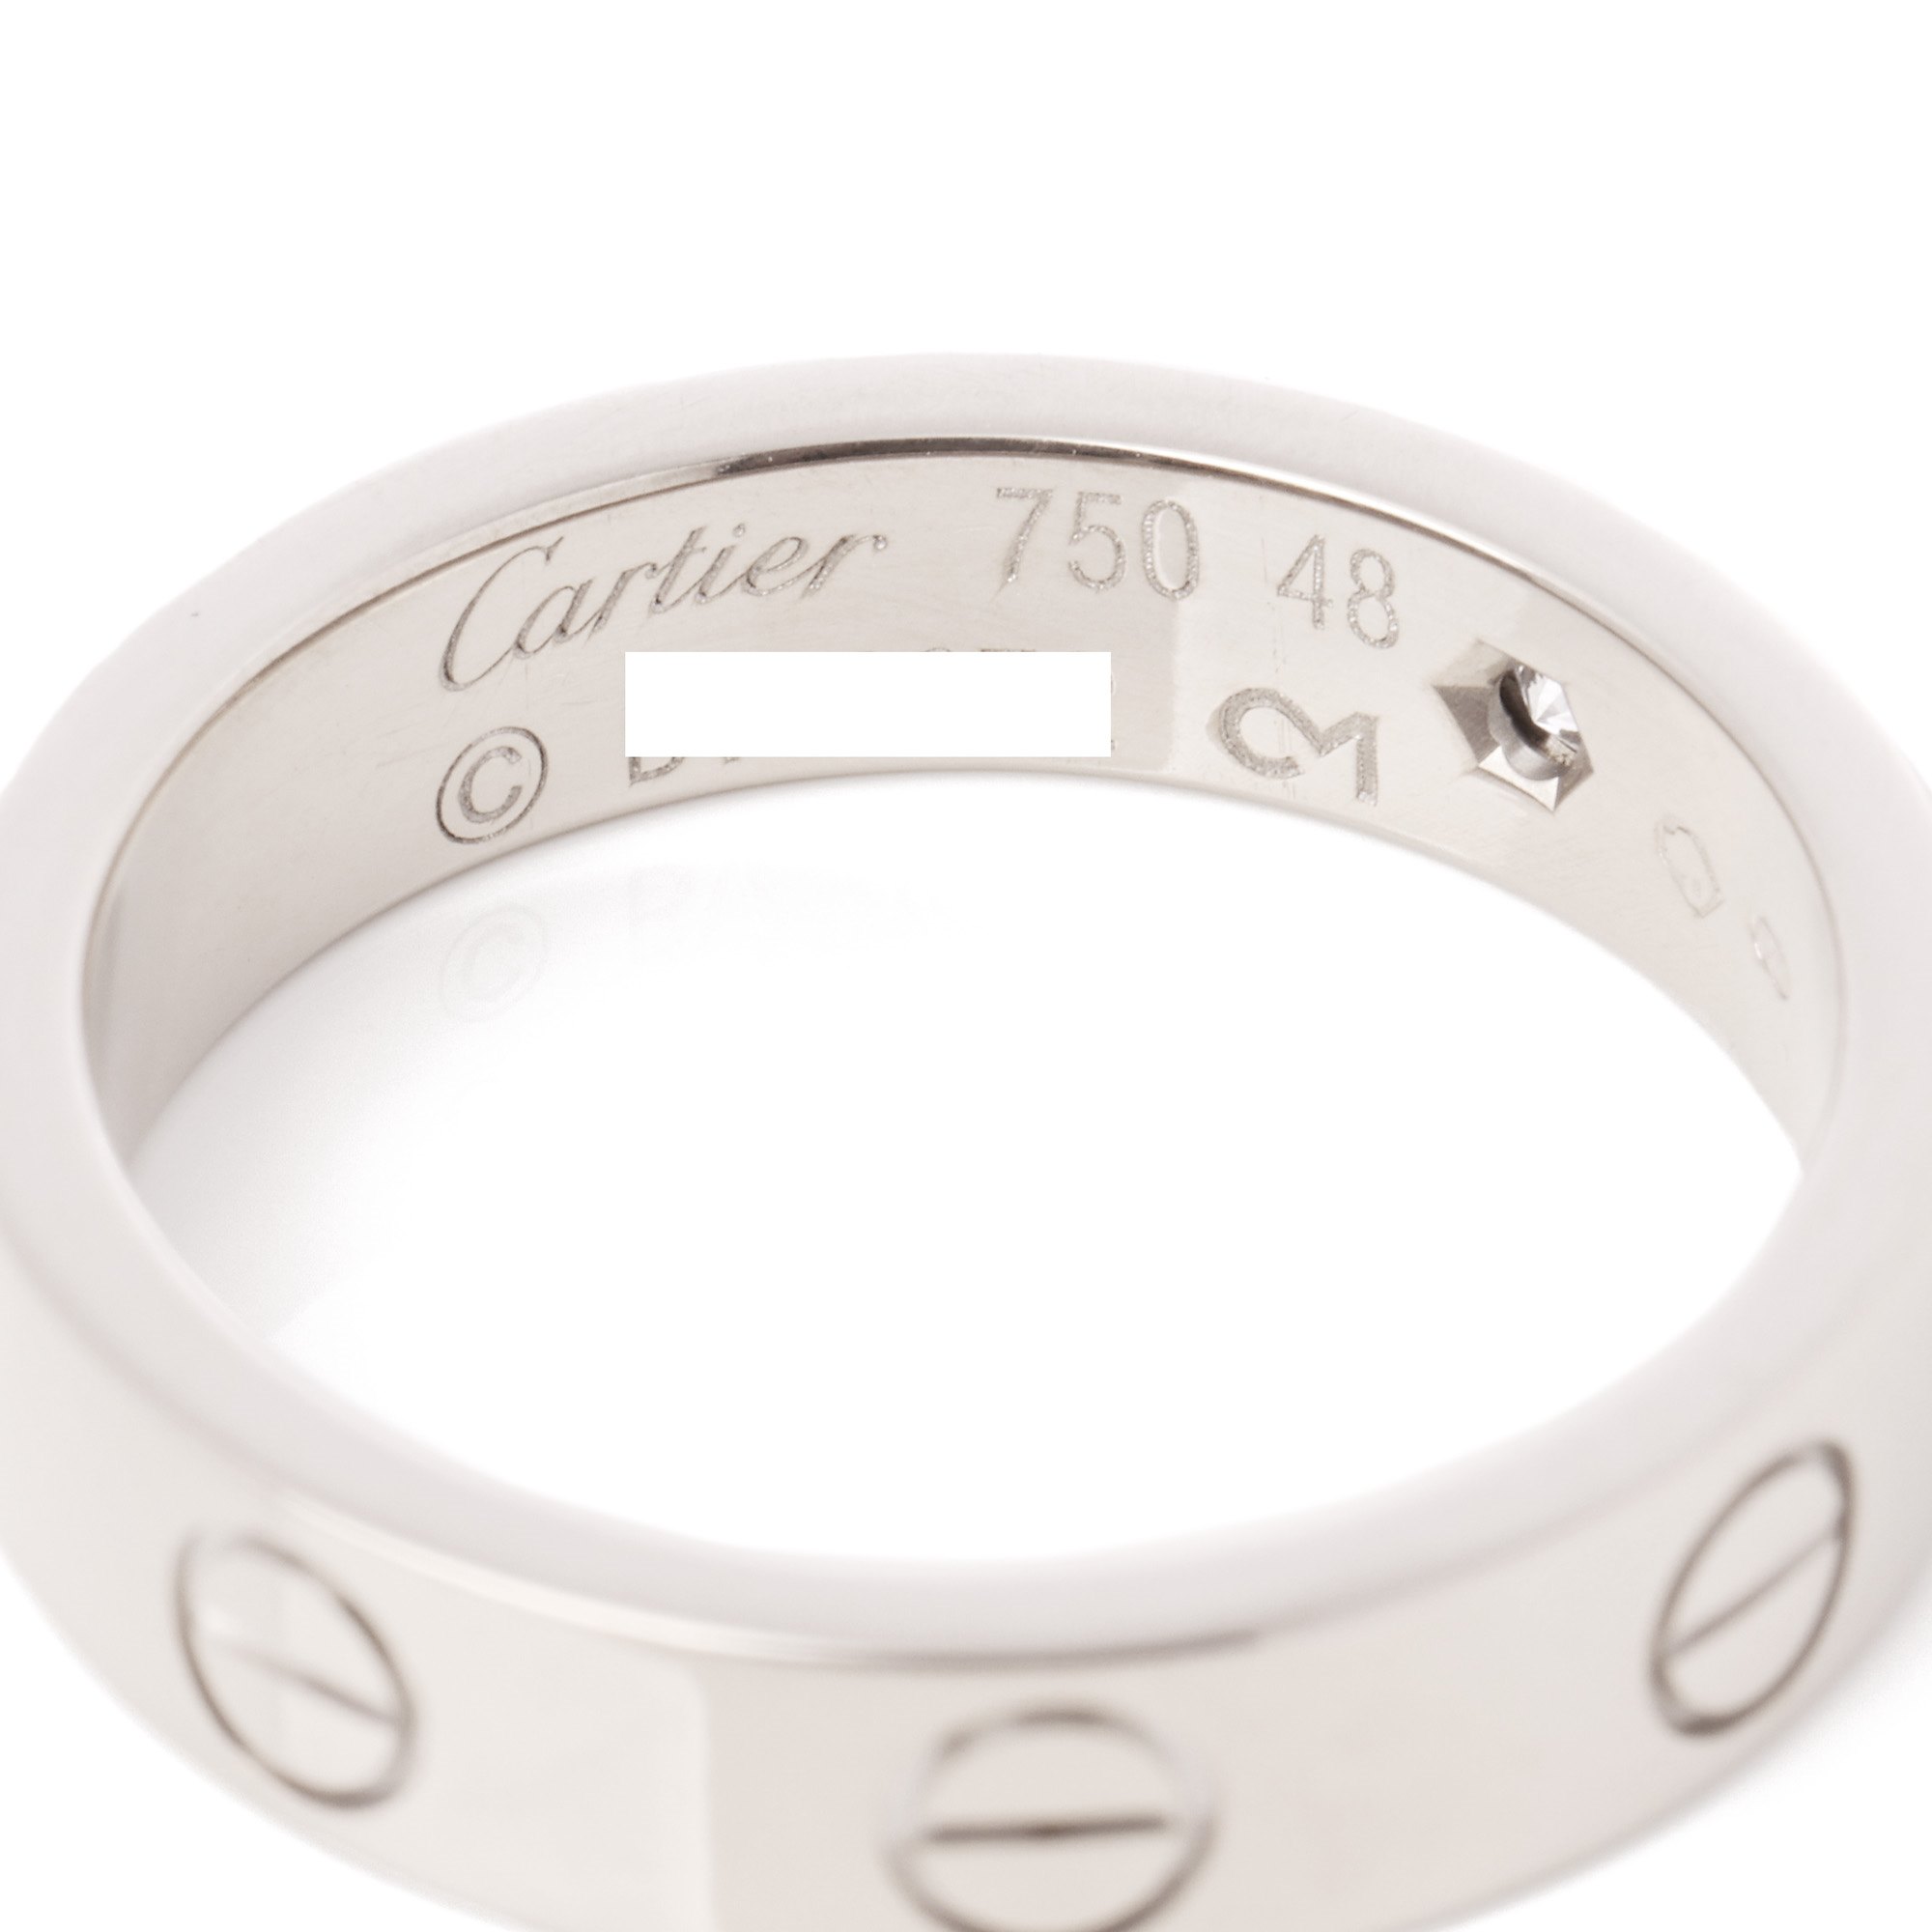 Cartier Love 1 Diamond Wedding Band Ring